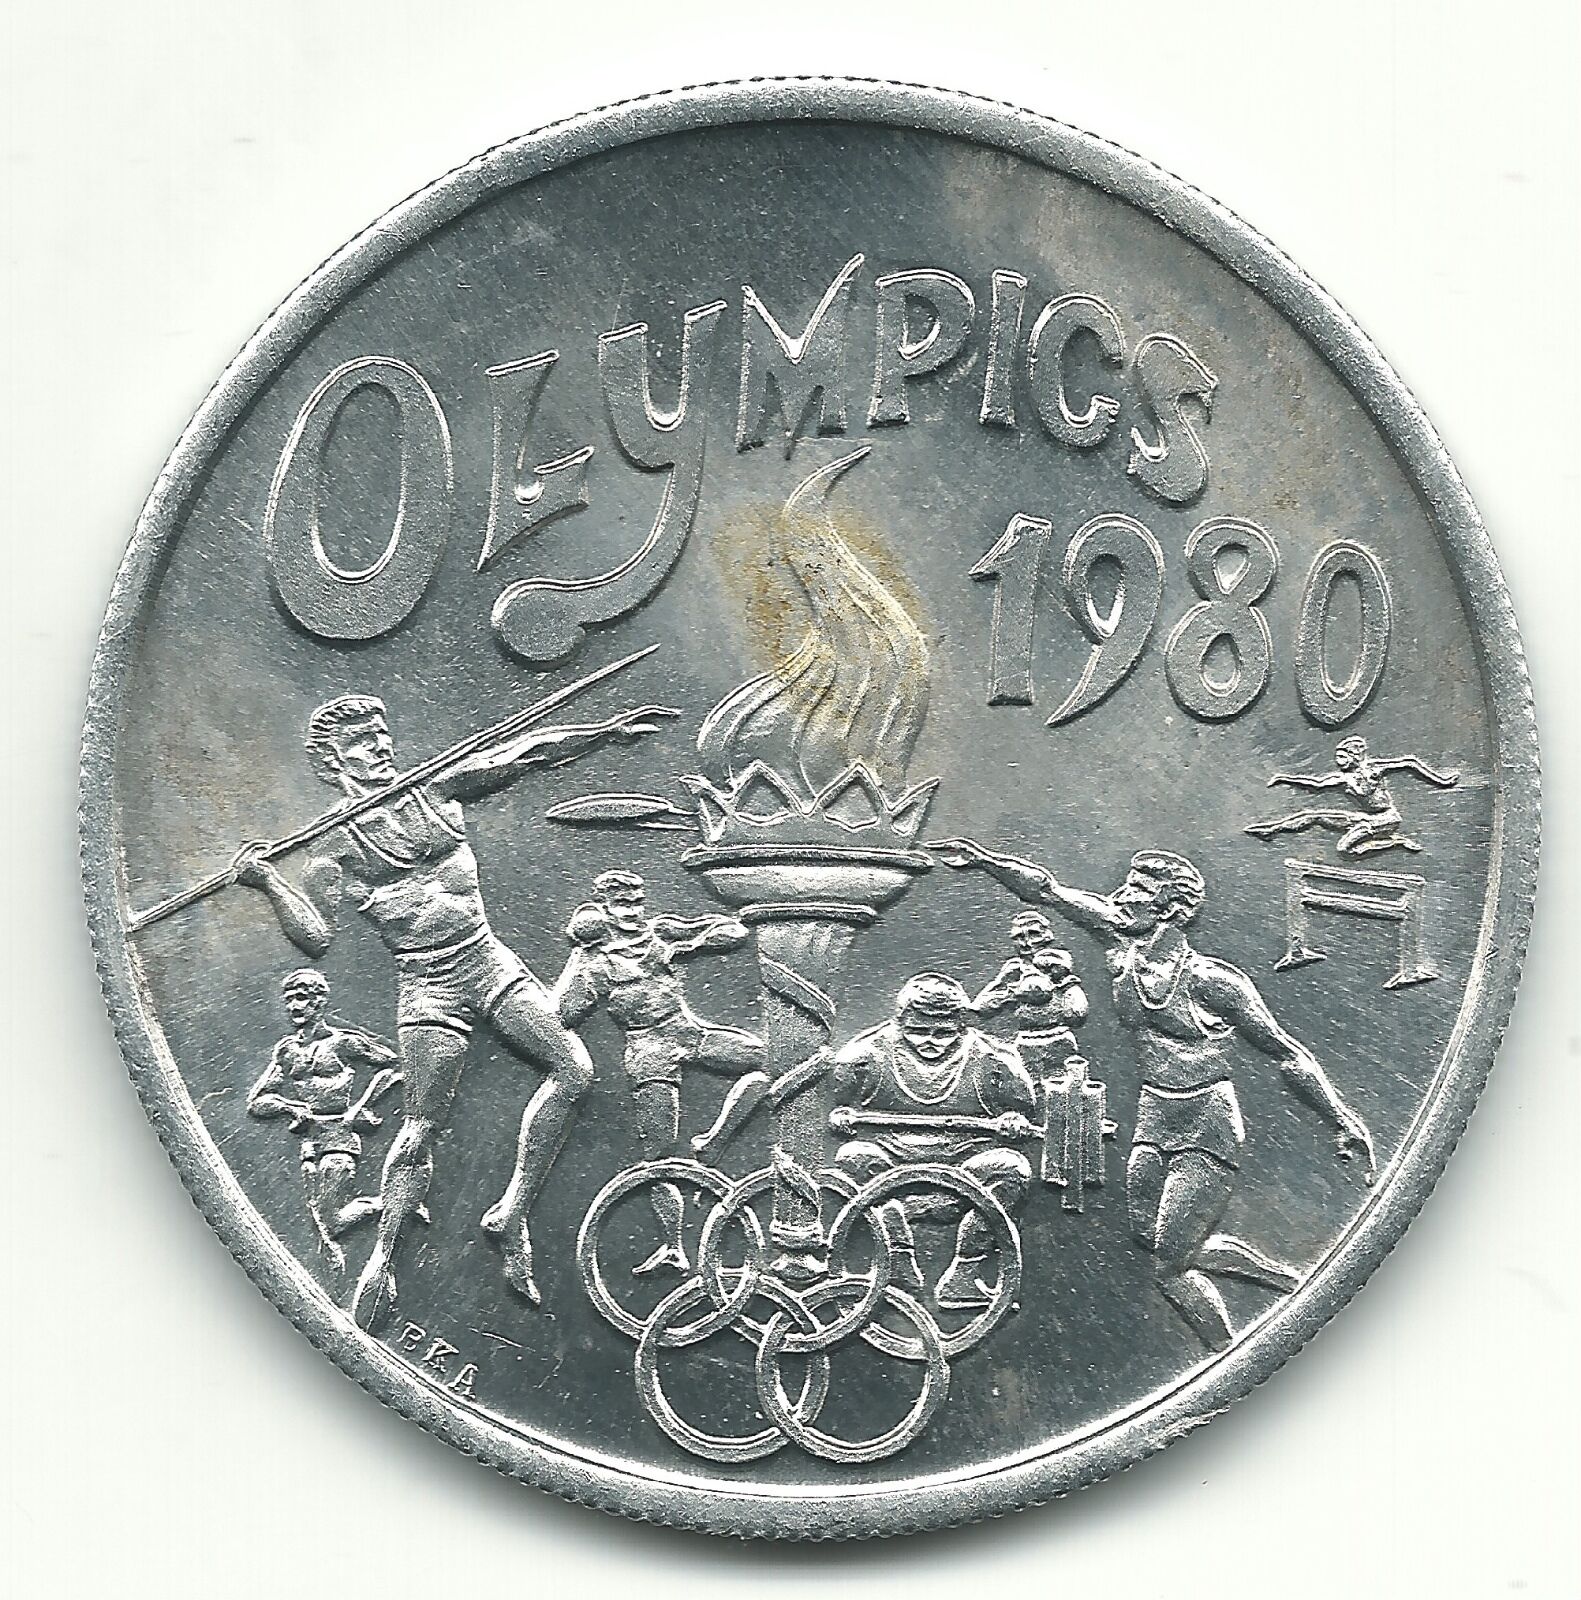 HIGH GRADE ALUMINUM THE GLADIATORS OLYMPICS 1980 TOKEN-JUL607